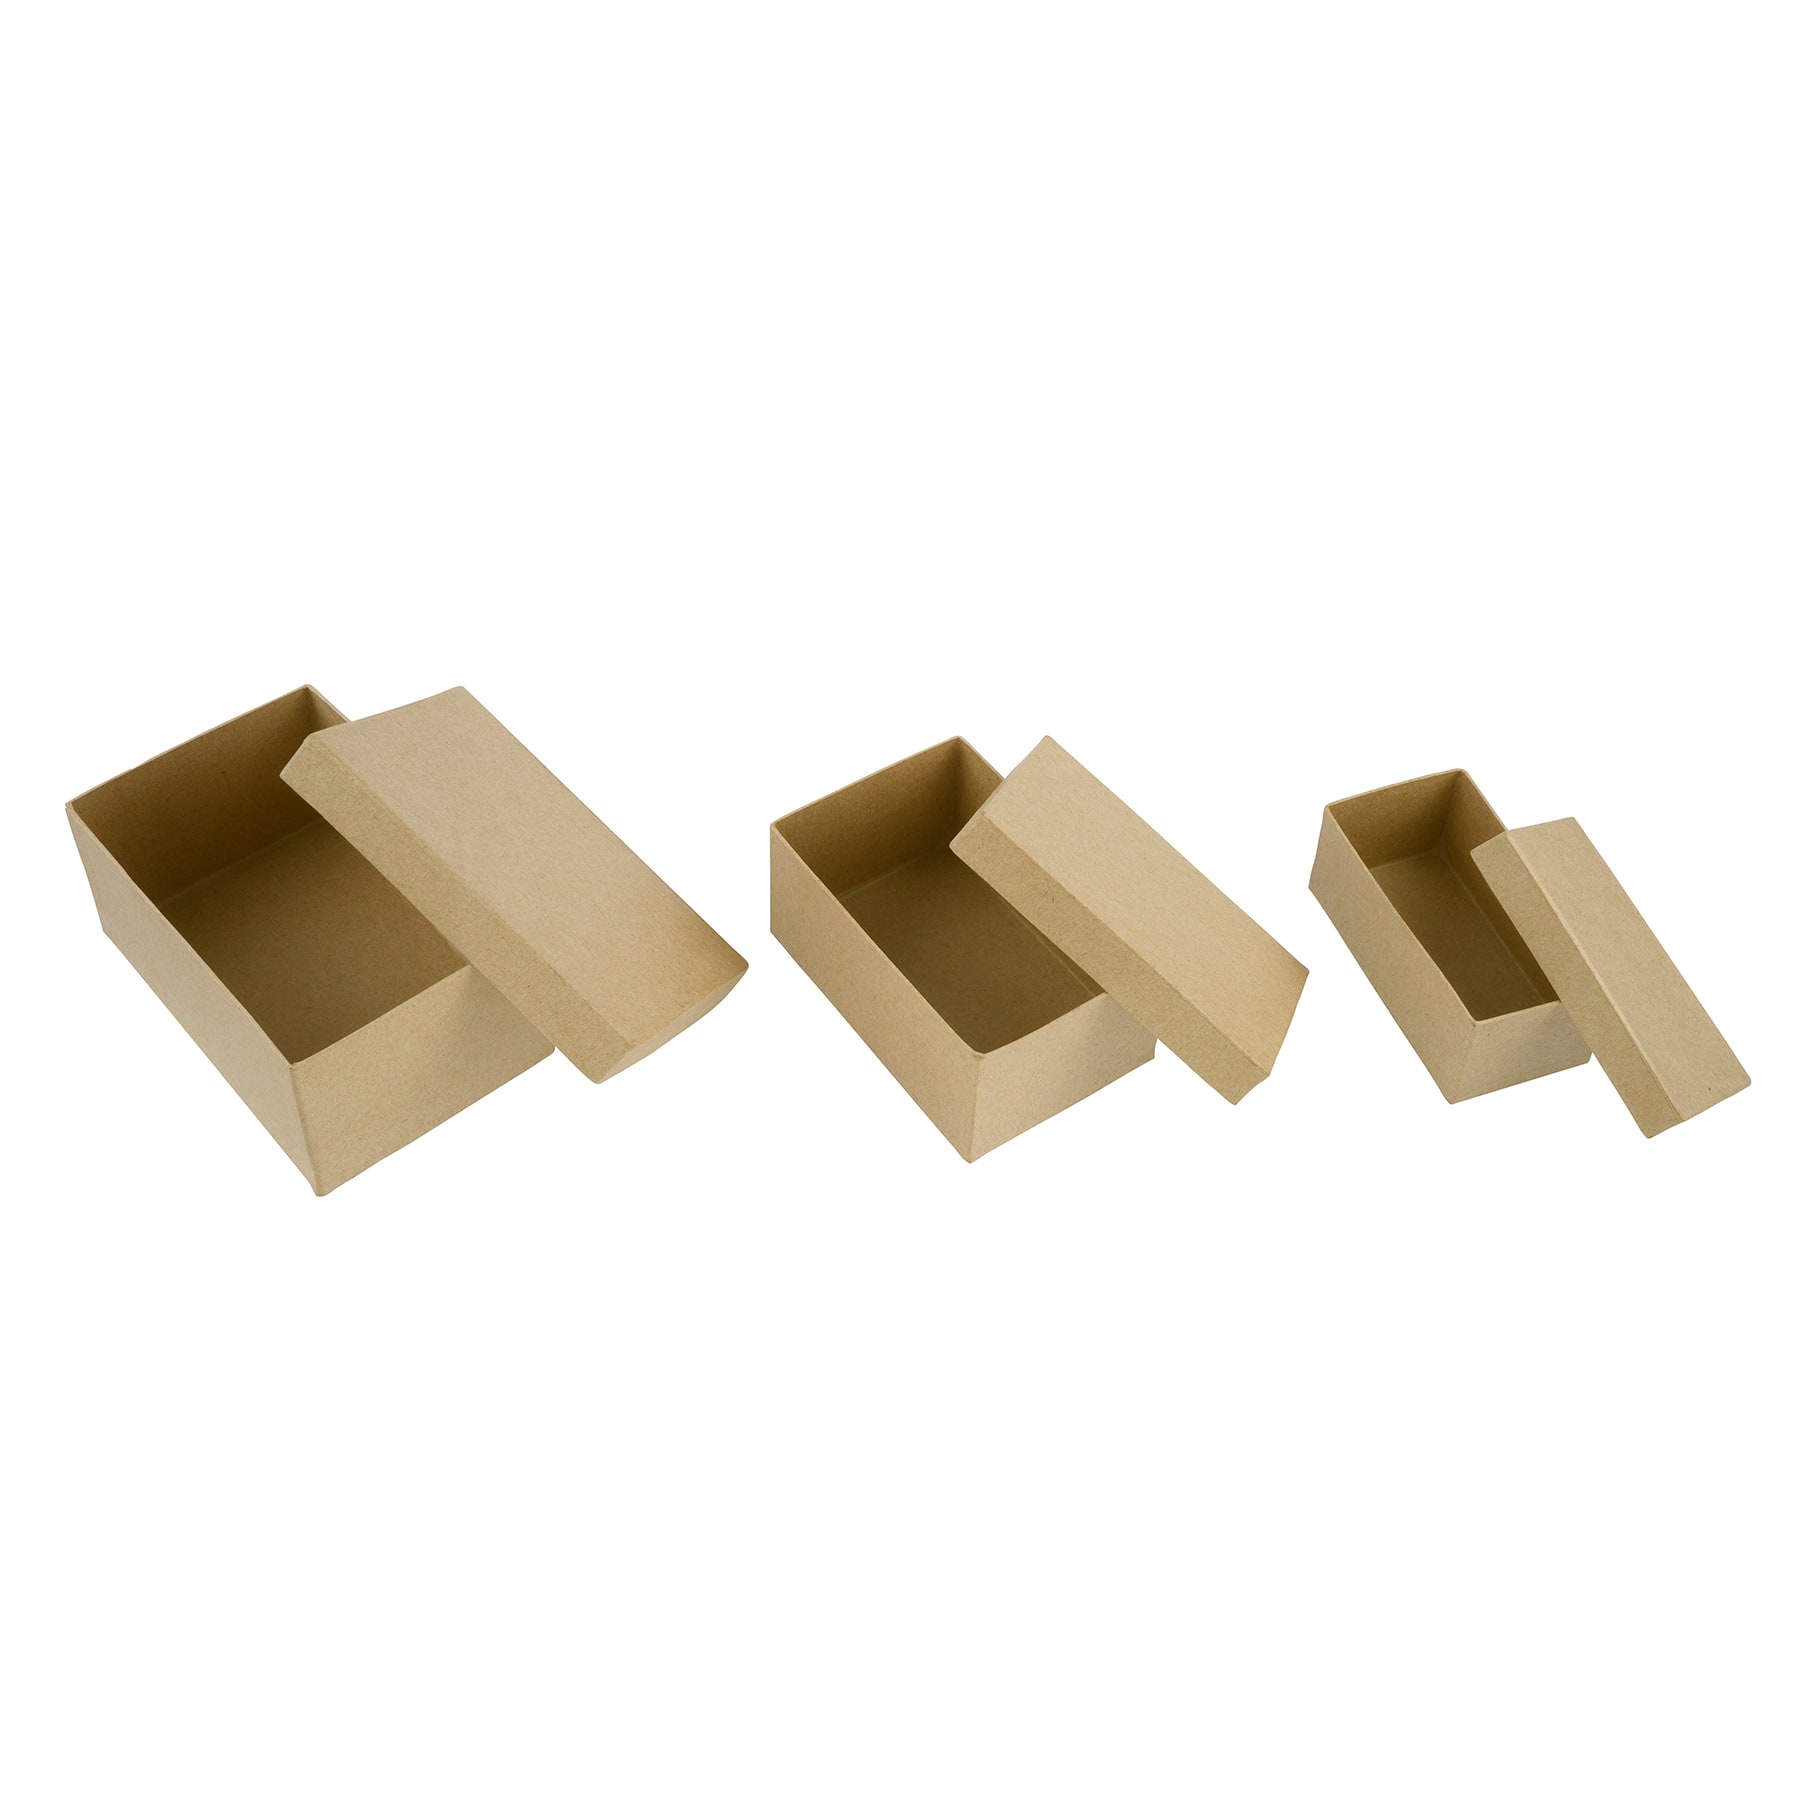 Paper-Mache Boxes Classpack 24pc Assortment 2